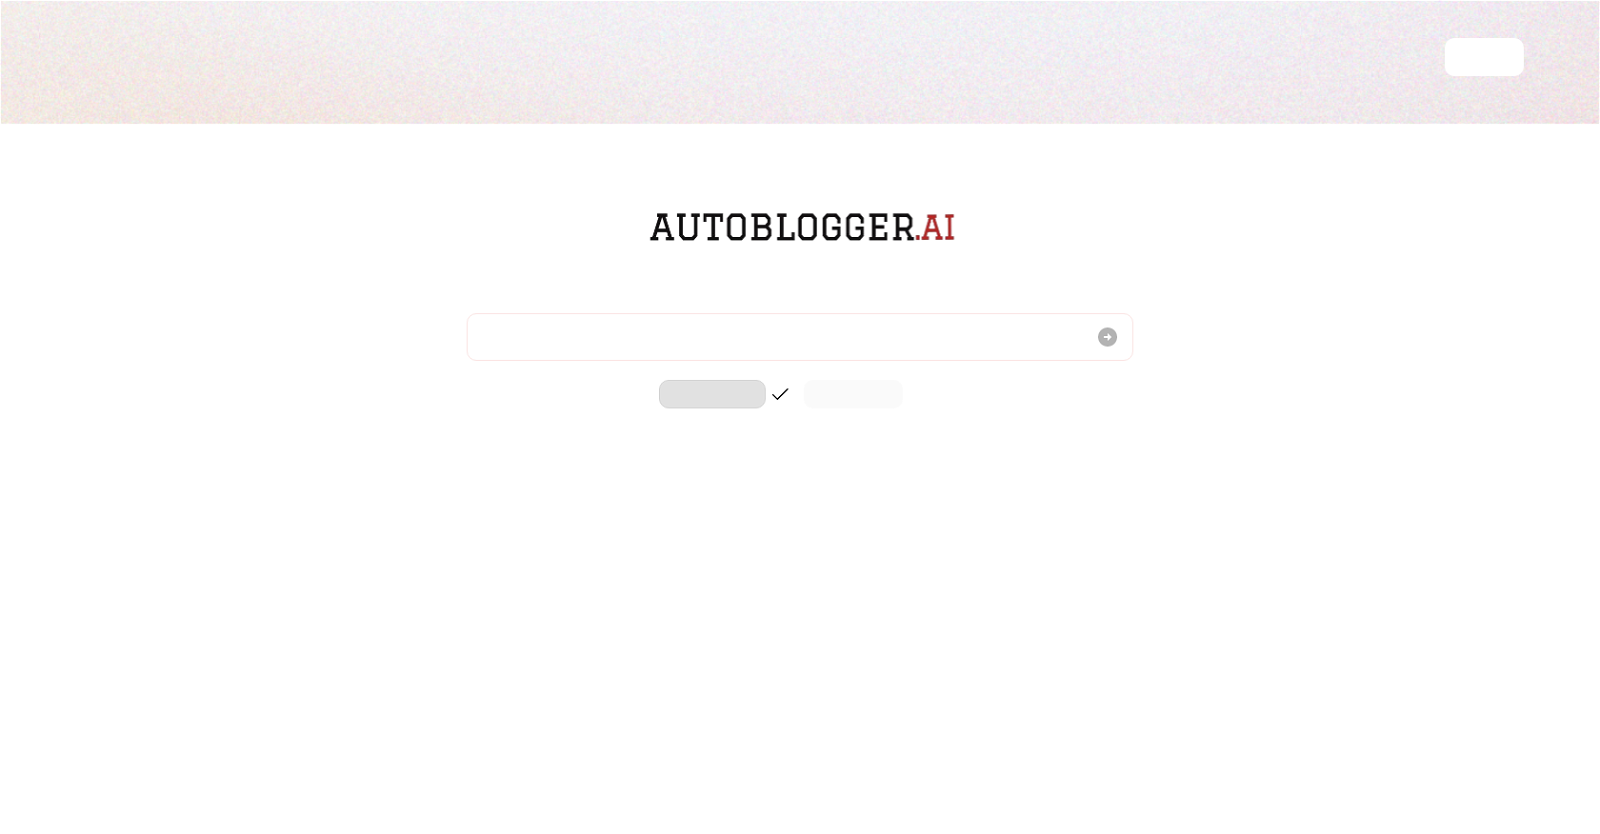 Autoblogger